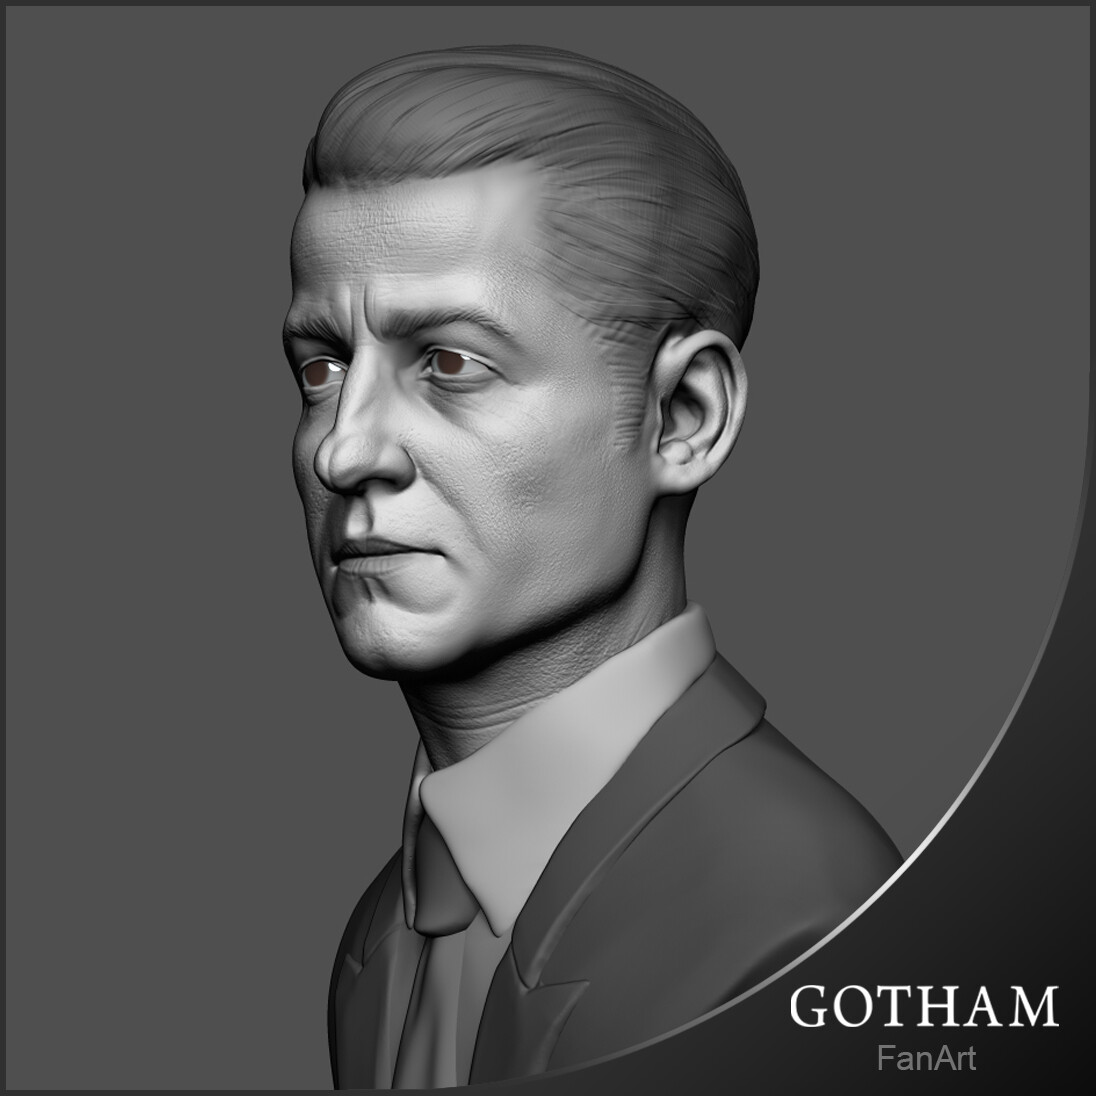 Gordon Gotham Fan Art.